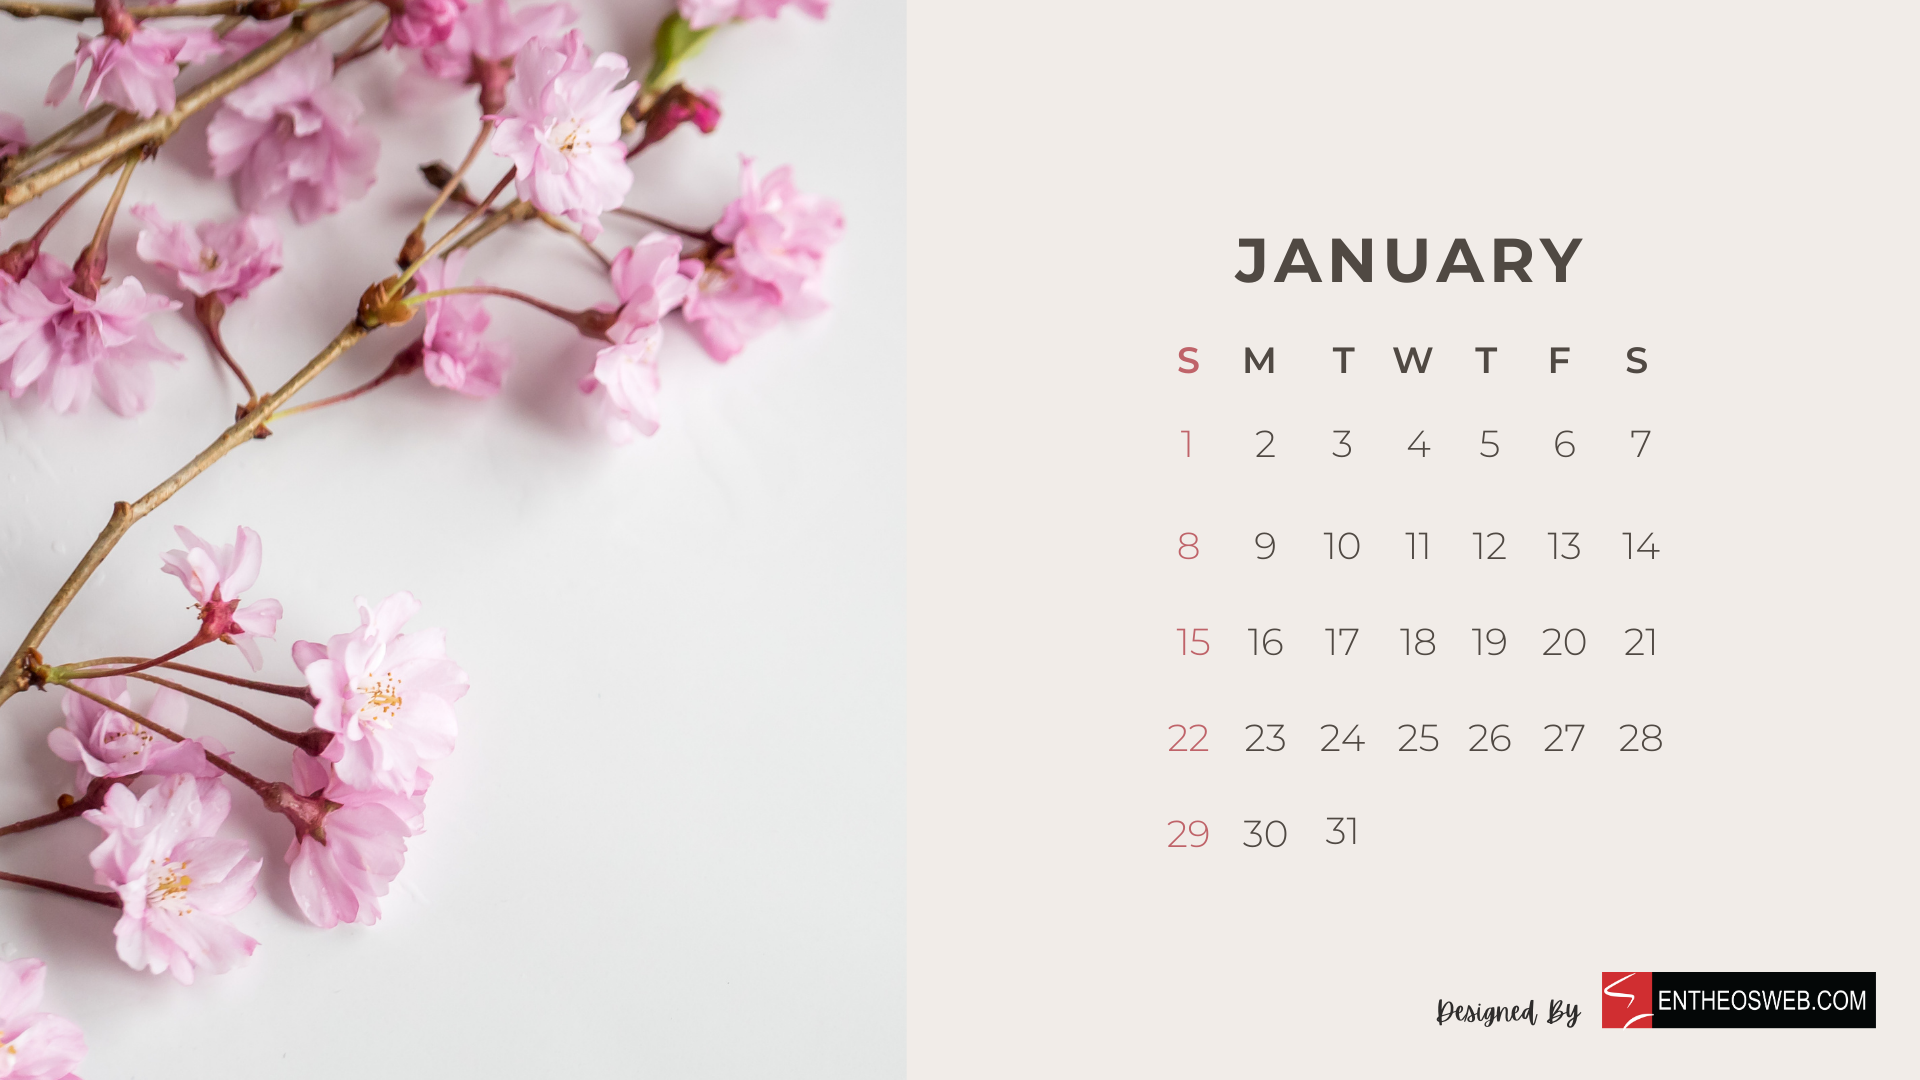 Beautiful Flowers 2023 Monthly Calendar for Desktop Wallpaper and Print